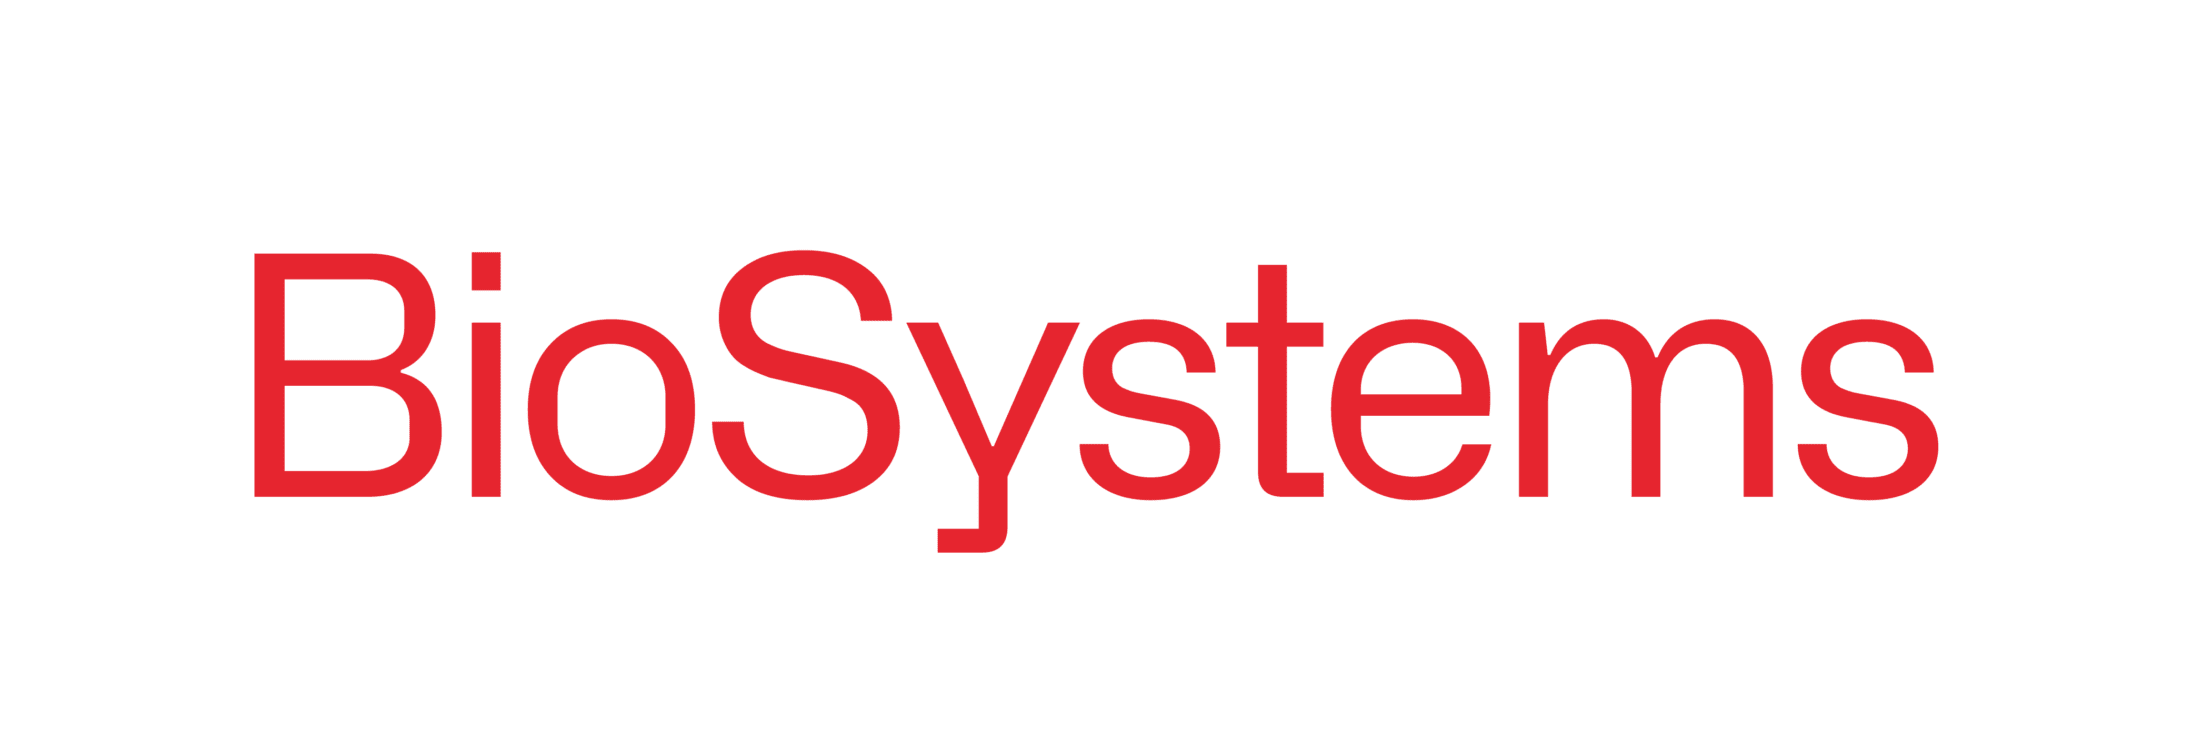 BioSystems logo